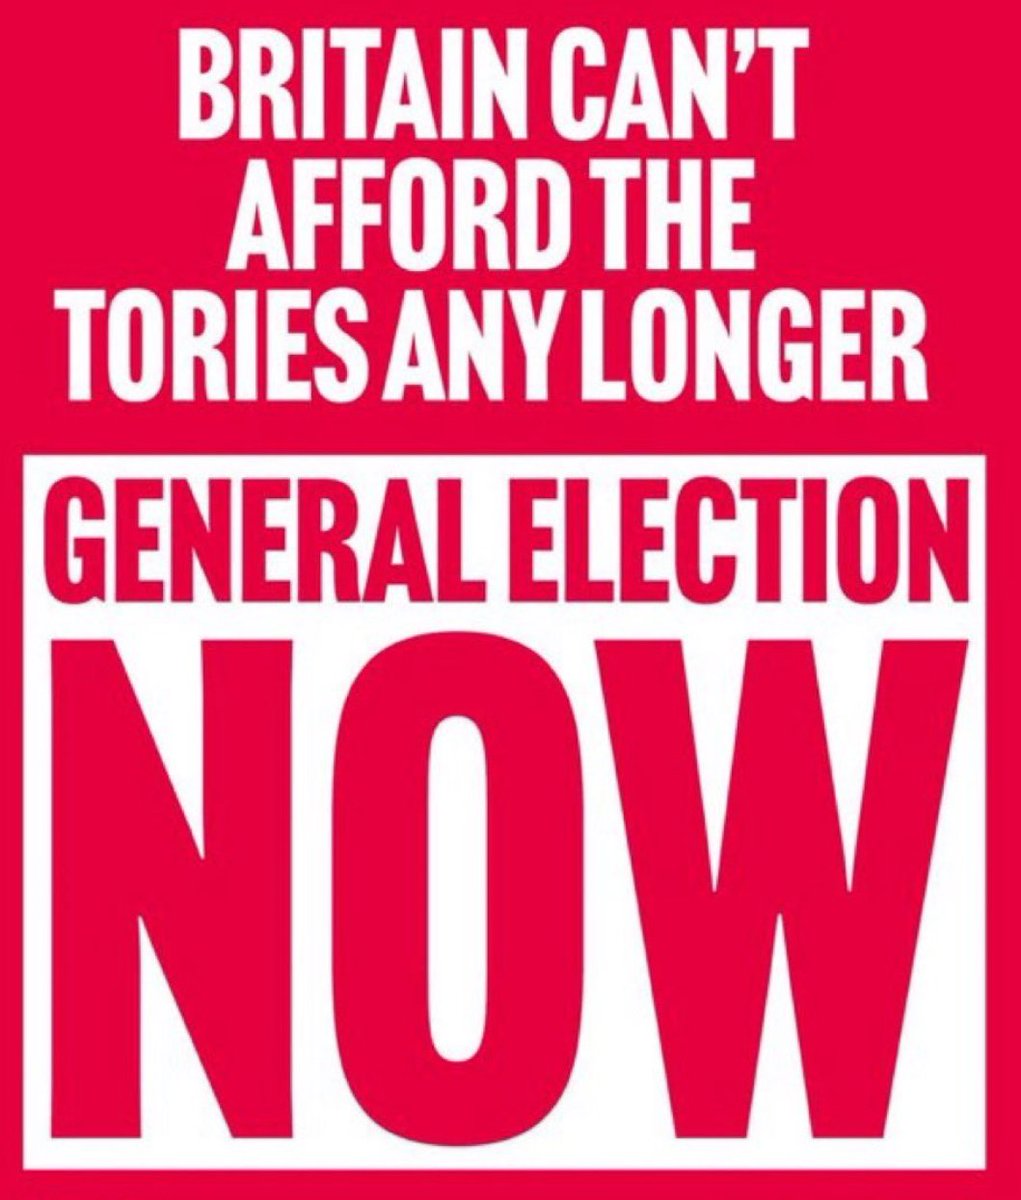 @RhonddaBryant Re-set the precedents!
Reset #PoliticalSystemUK
Get it done #PR #ToriesOut346 
#GeneralElectionNow